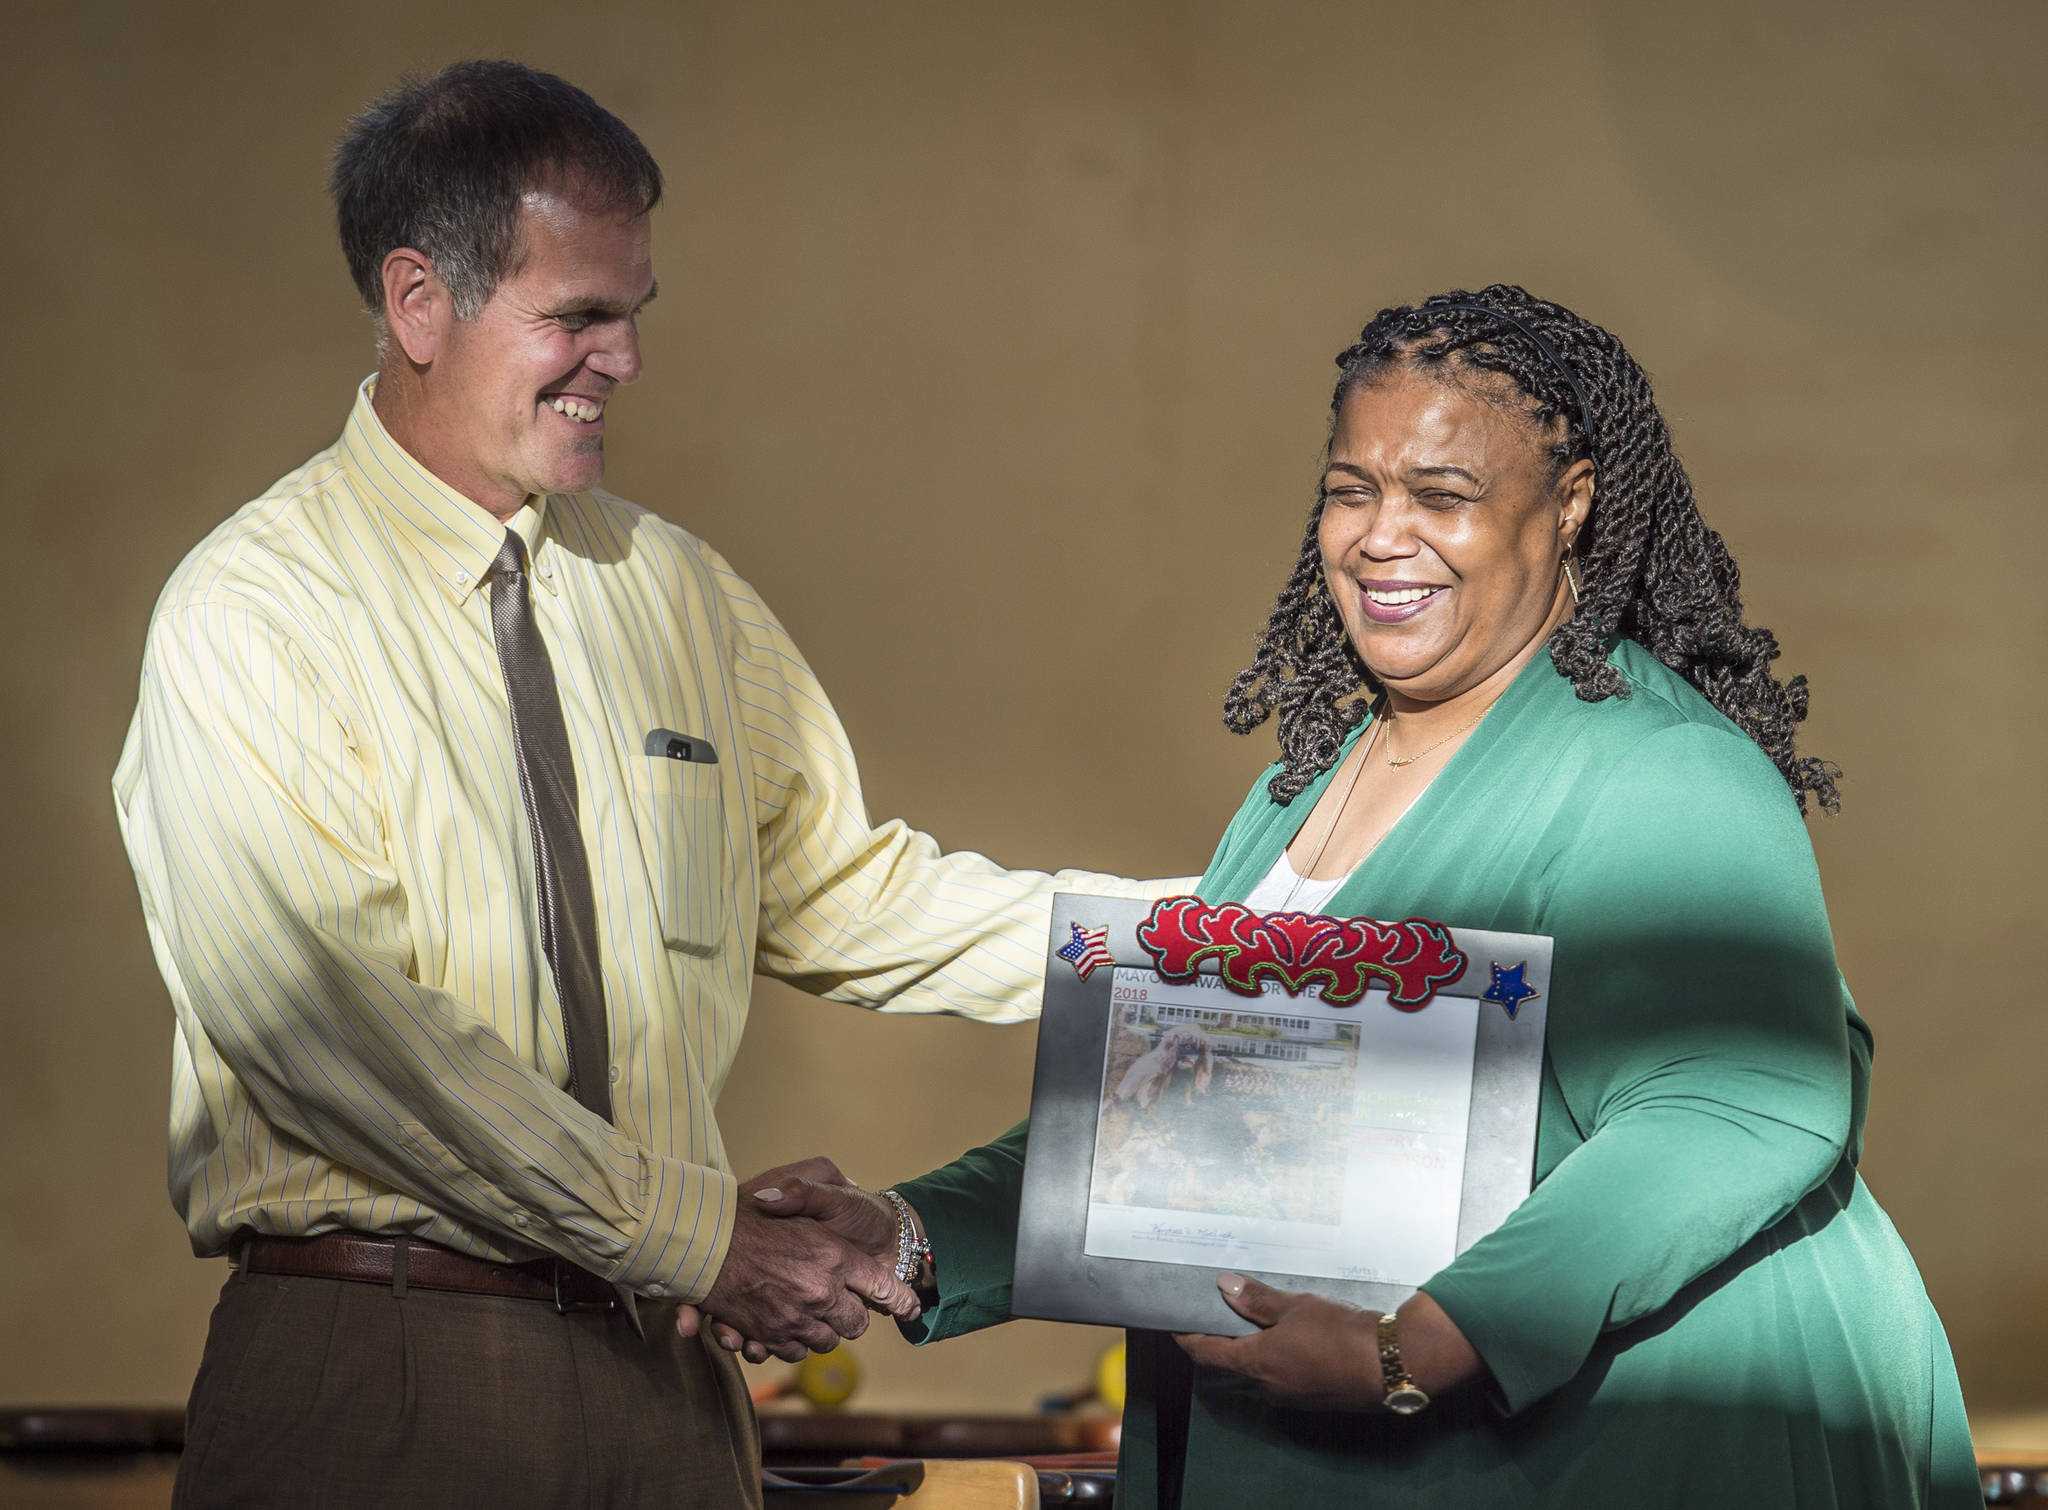 Deputy Mayor Jerry Nankervis congratulates Sherry Patterson for the Achievement in the Arts Award during the Mayor’s Awards for the Arts at the Juneau Arts & Culture Center on Friday, August 17, 2018. (Michael Penn | Juneau Empire)